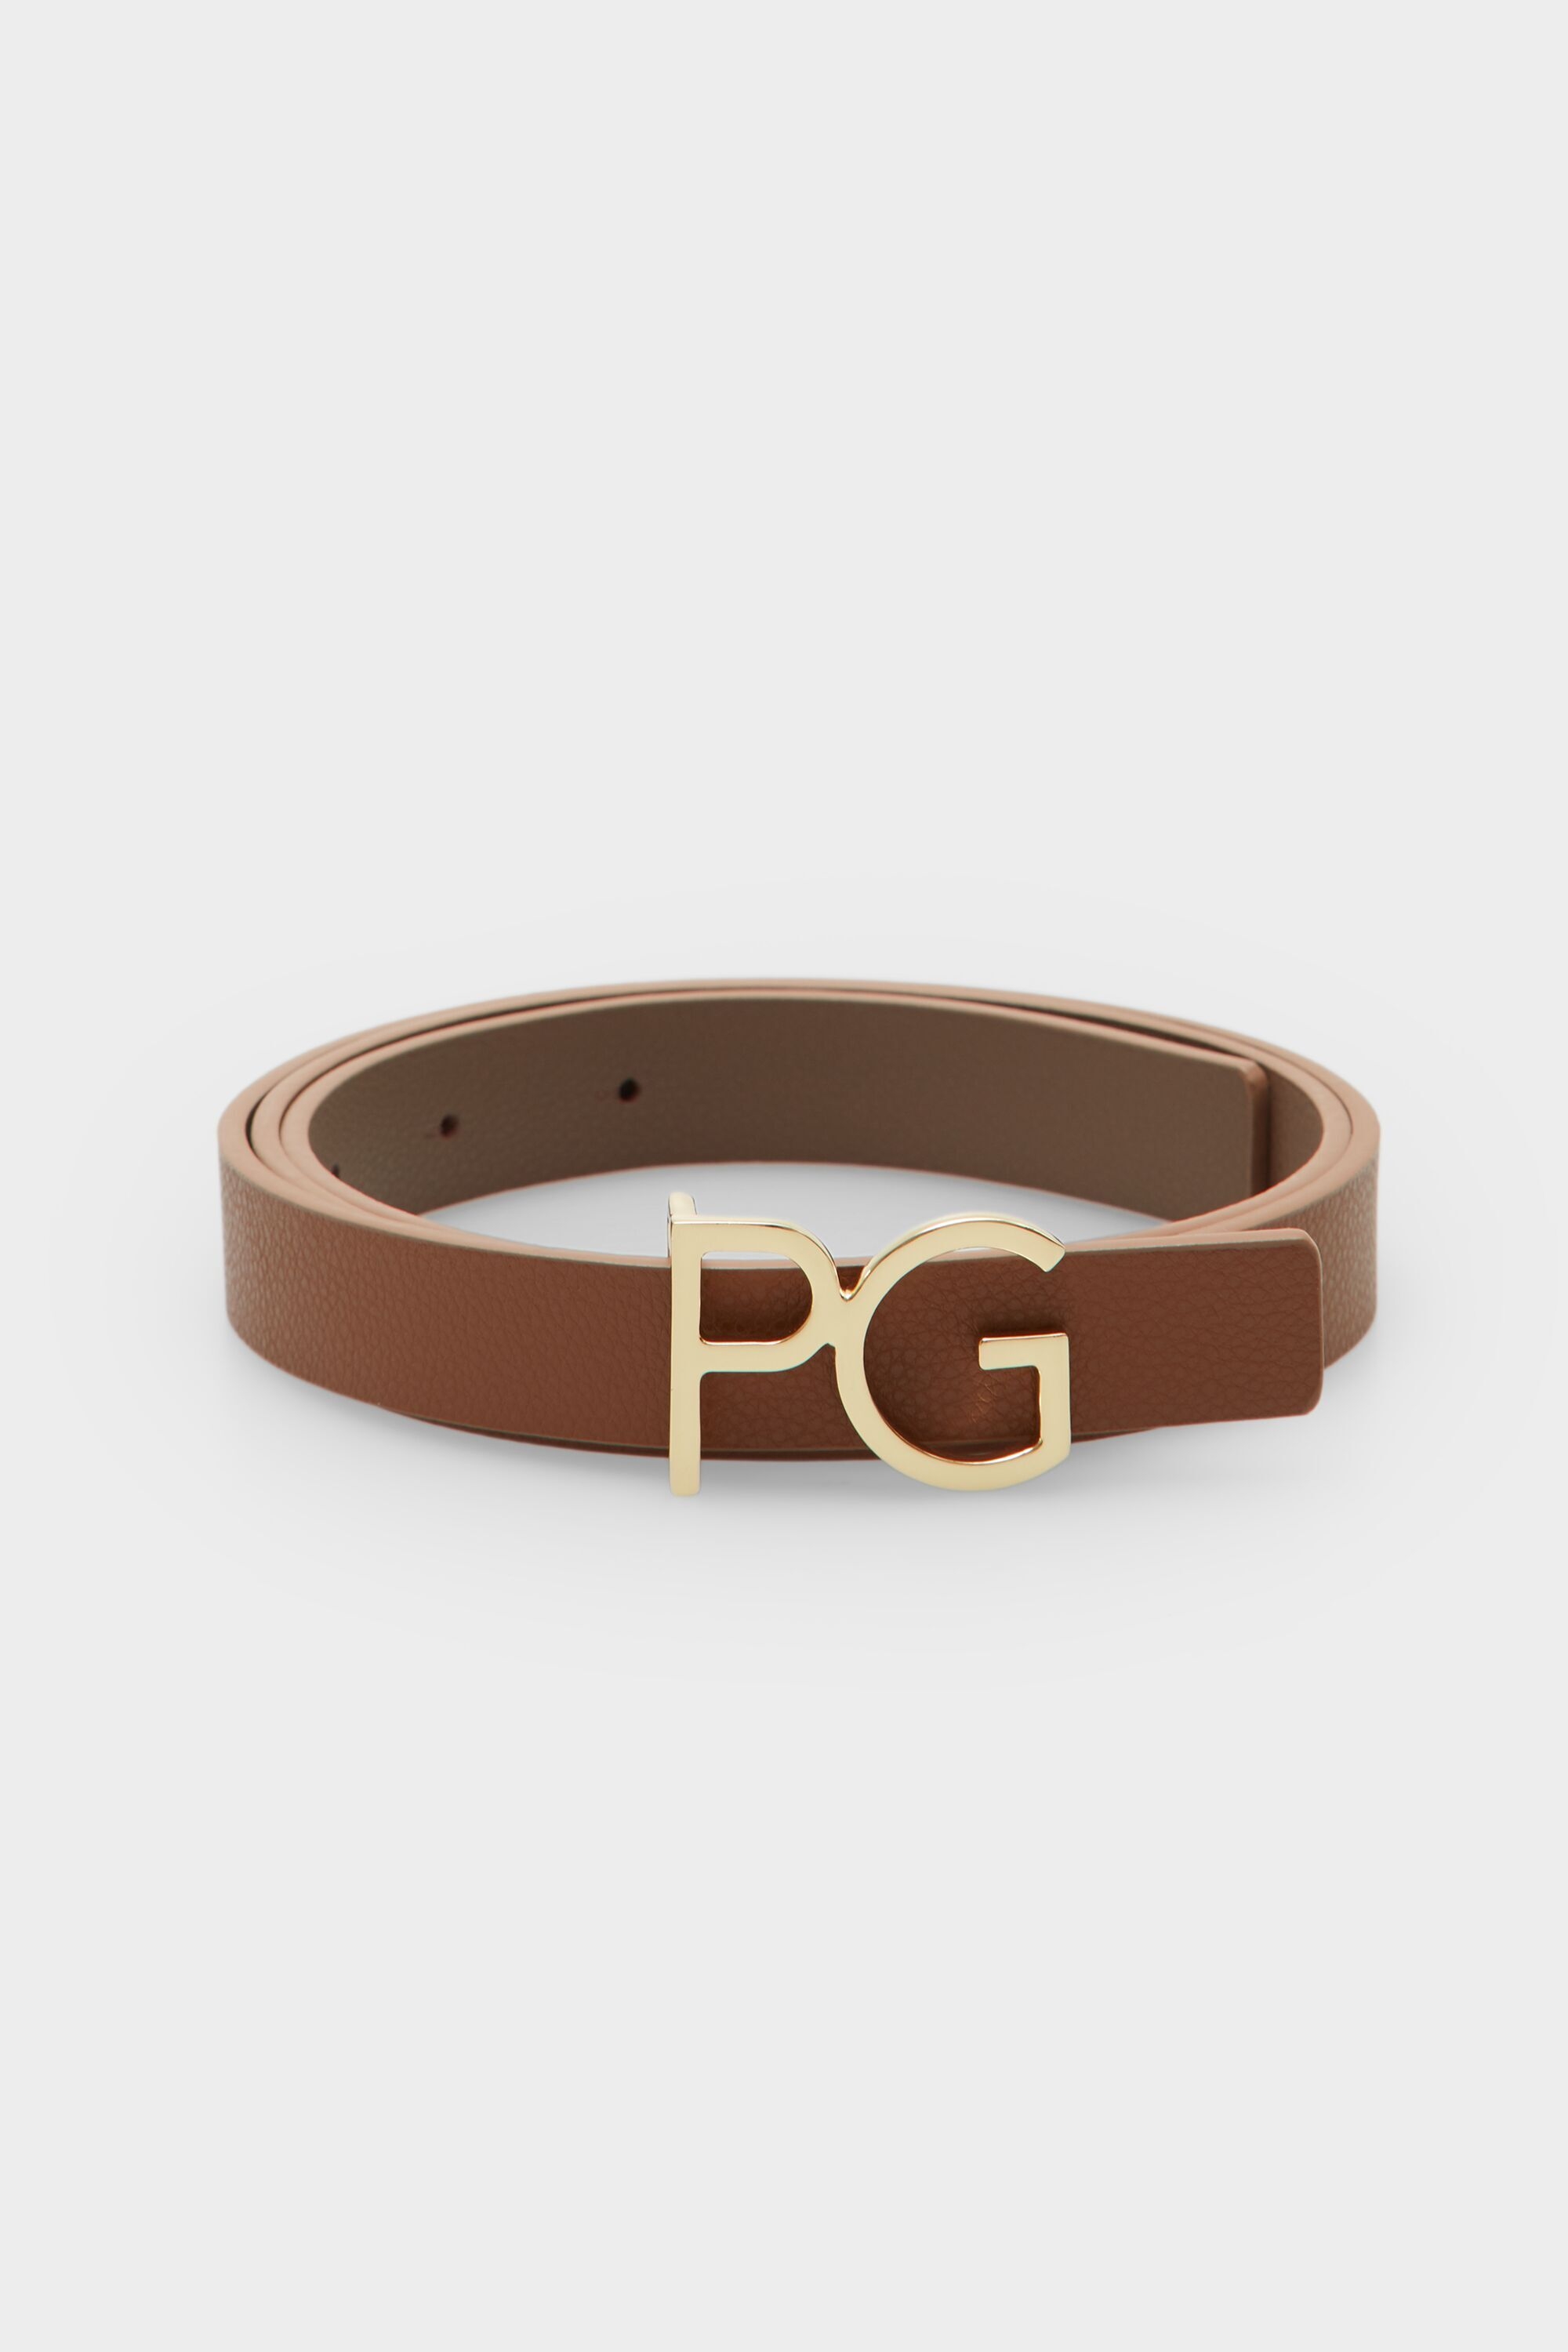 PG reversible leather belt